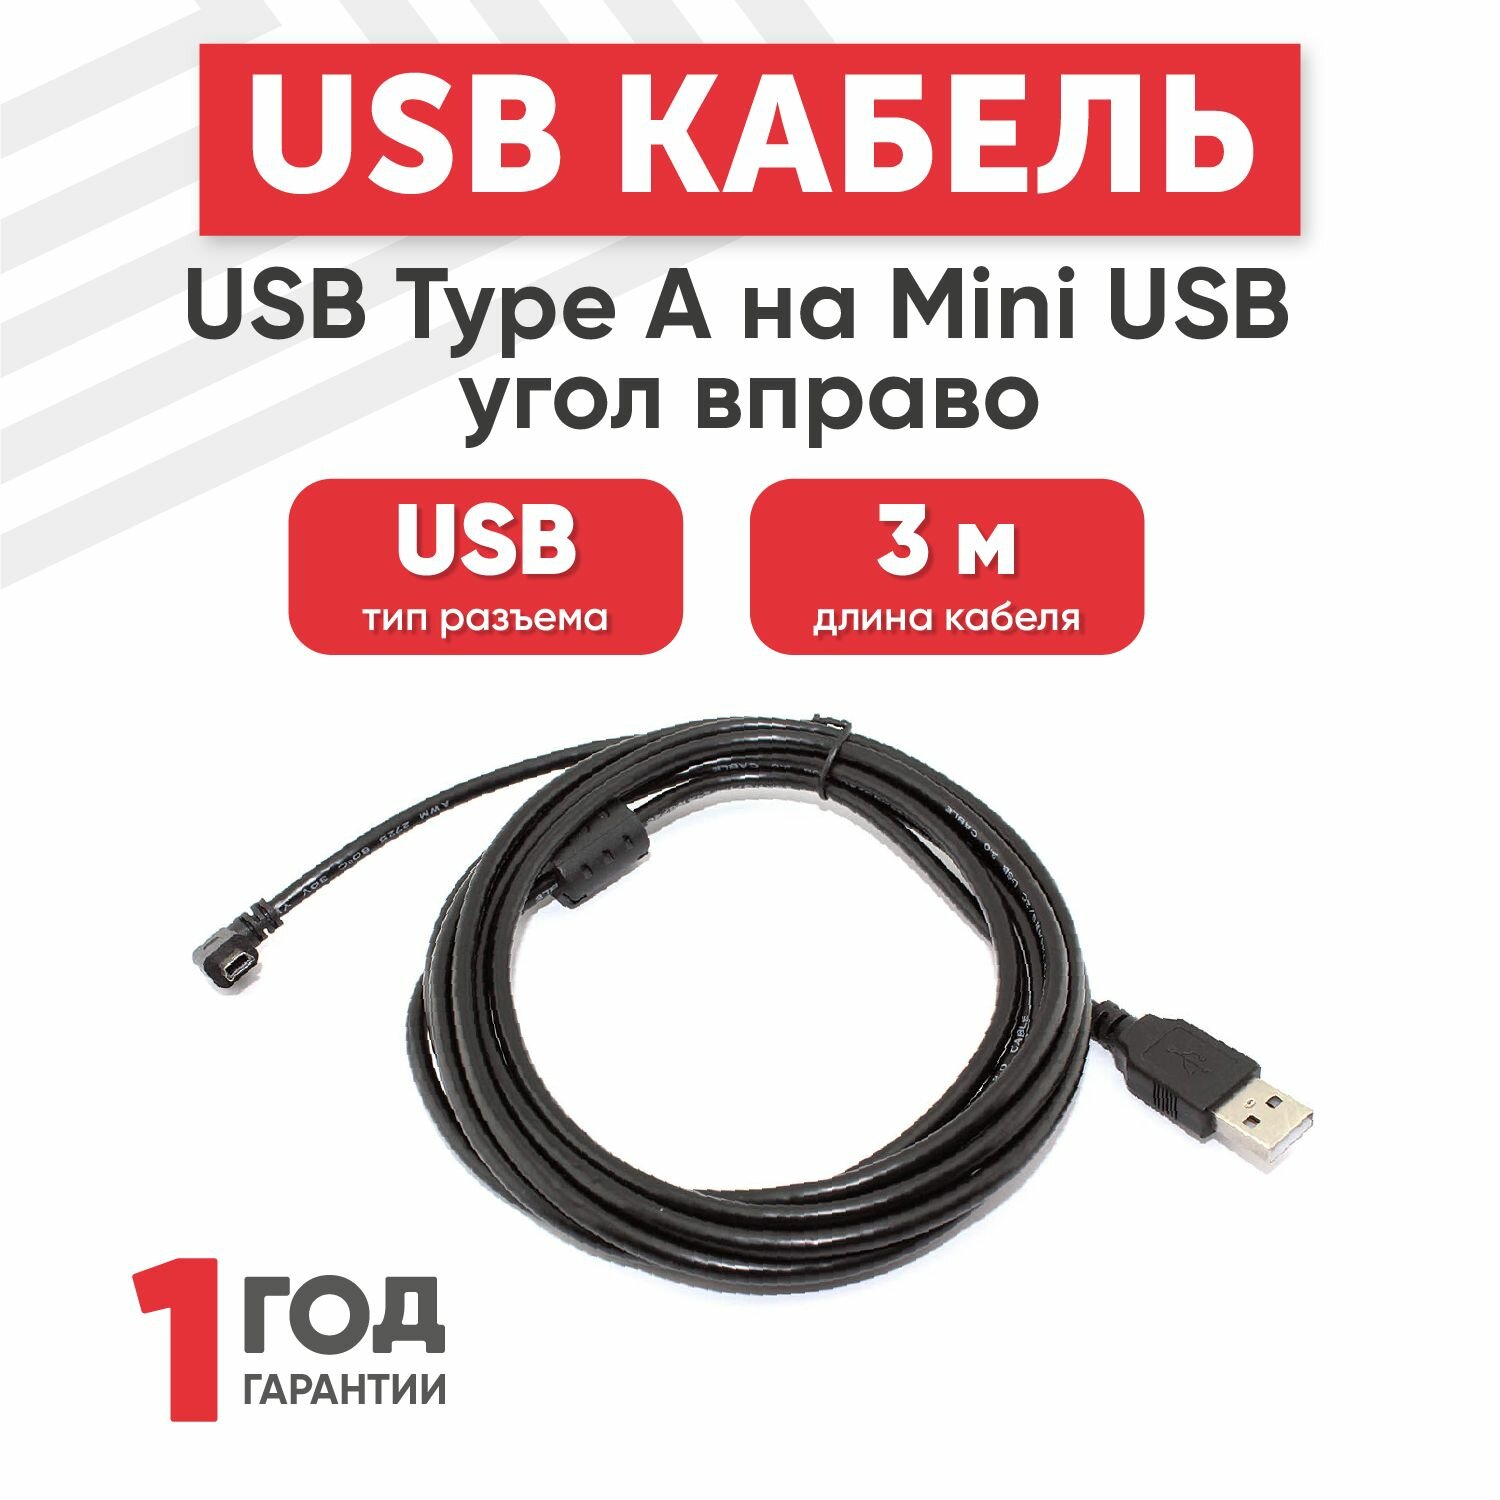 Кабель USB Type-A на MiniUSB угол вправо, длина 3 метра